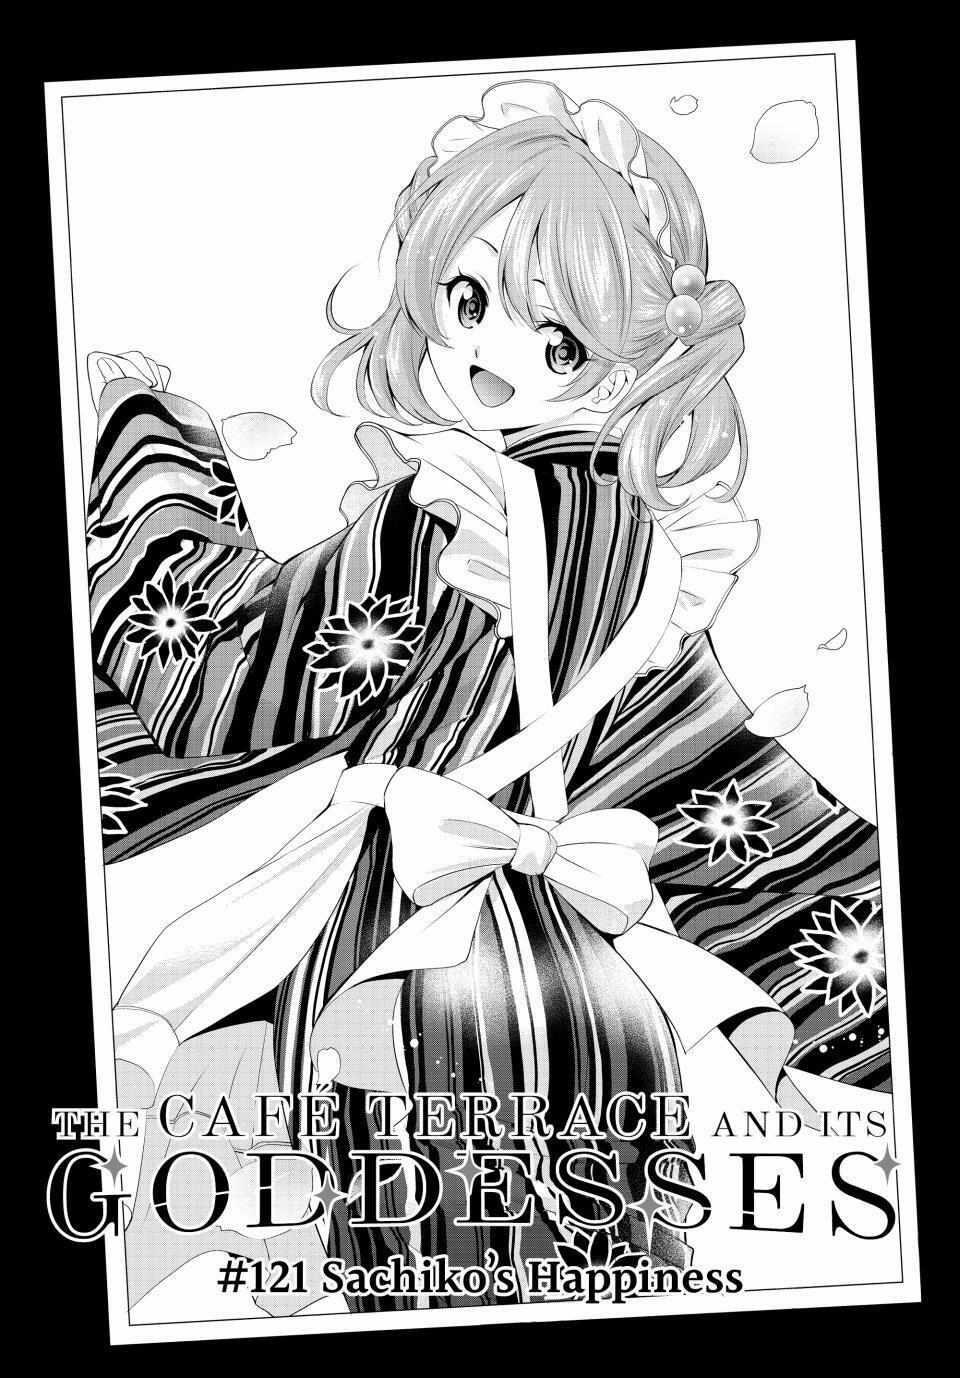 Goddess Café Terrace Manga Chapter 61